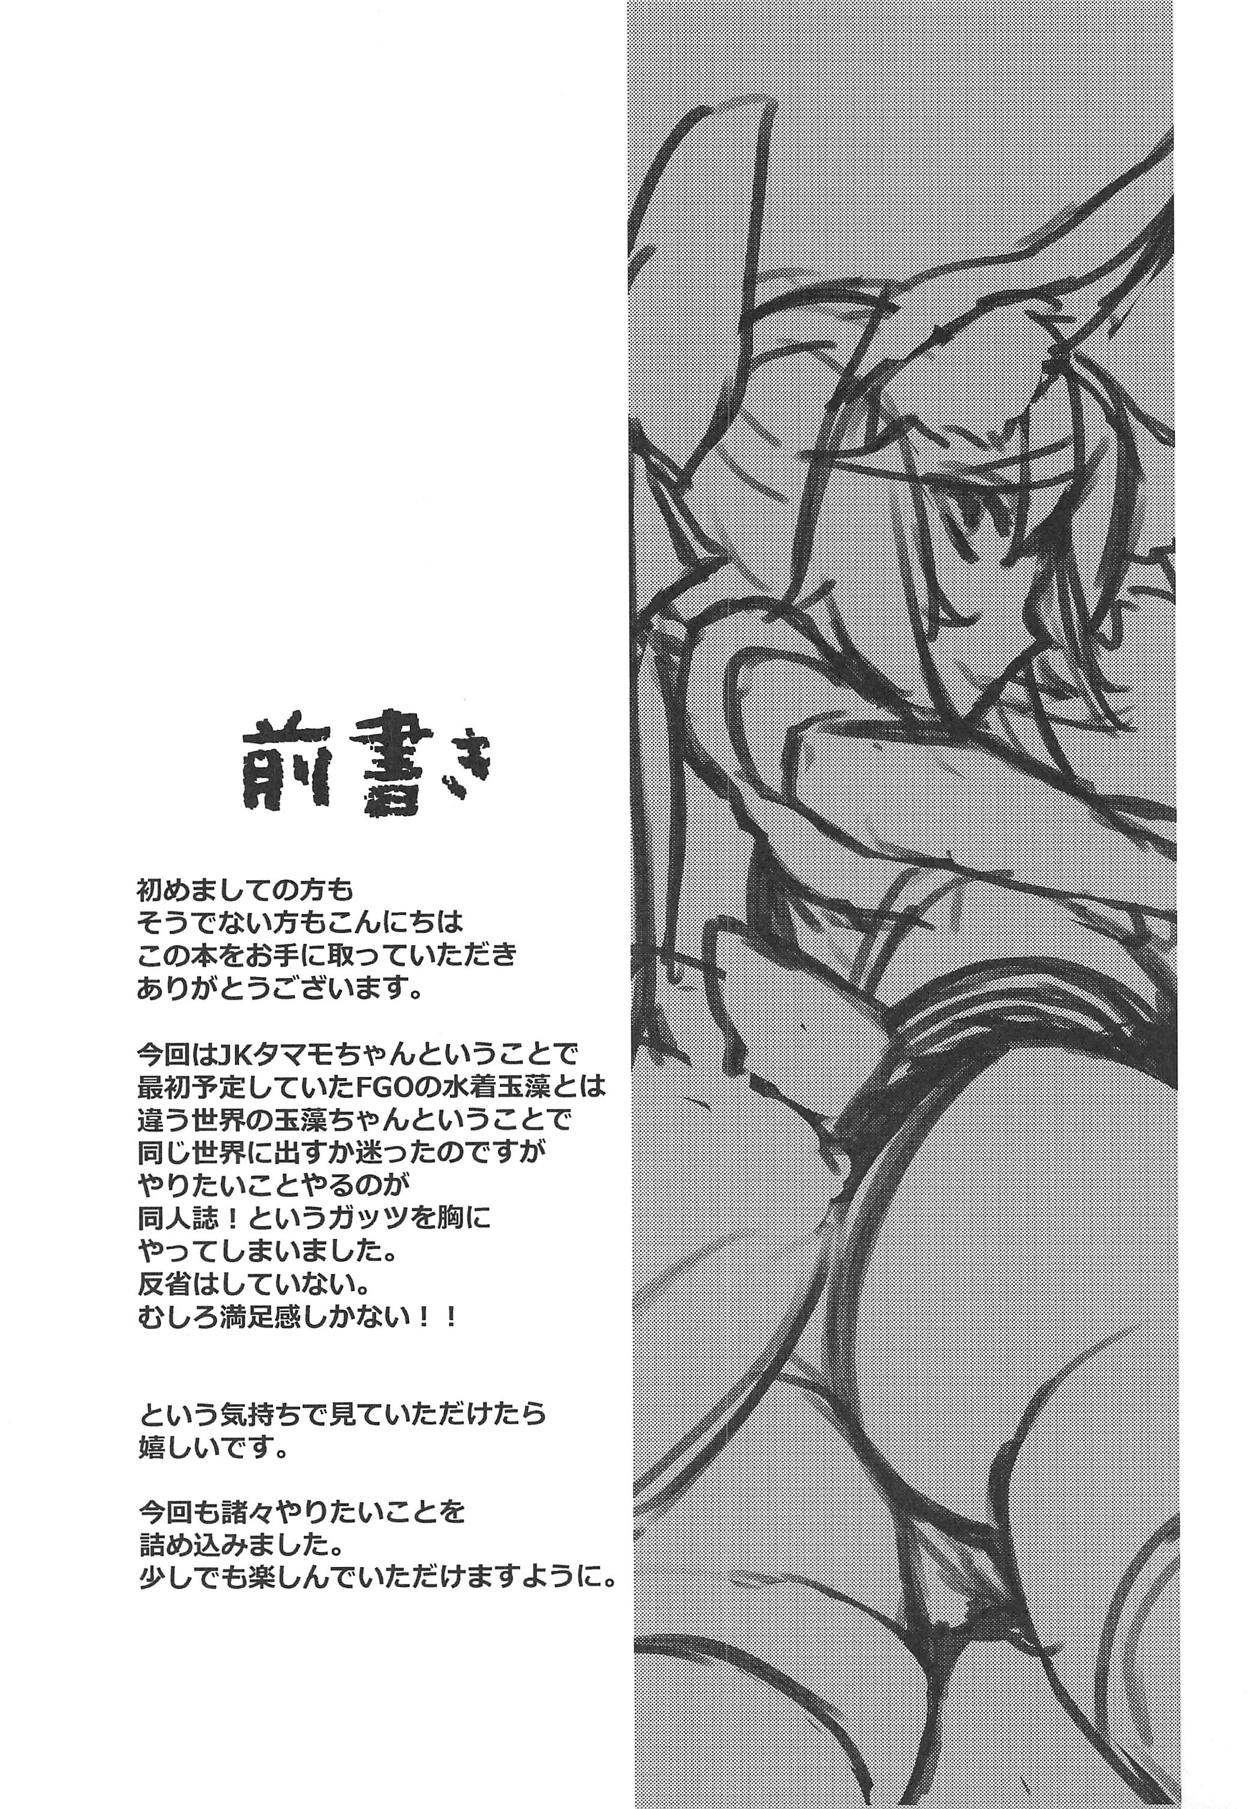 (C95) [pit.ra.bit (丹羽香ゆあん)] JKタマモちゃんとイチャイチャする本。 (Fate/Grand Order)